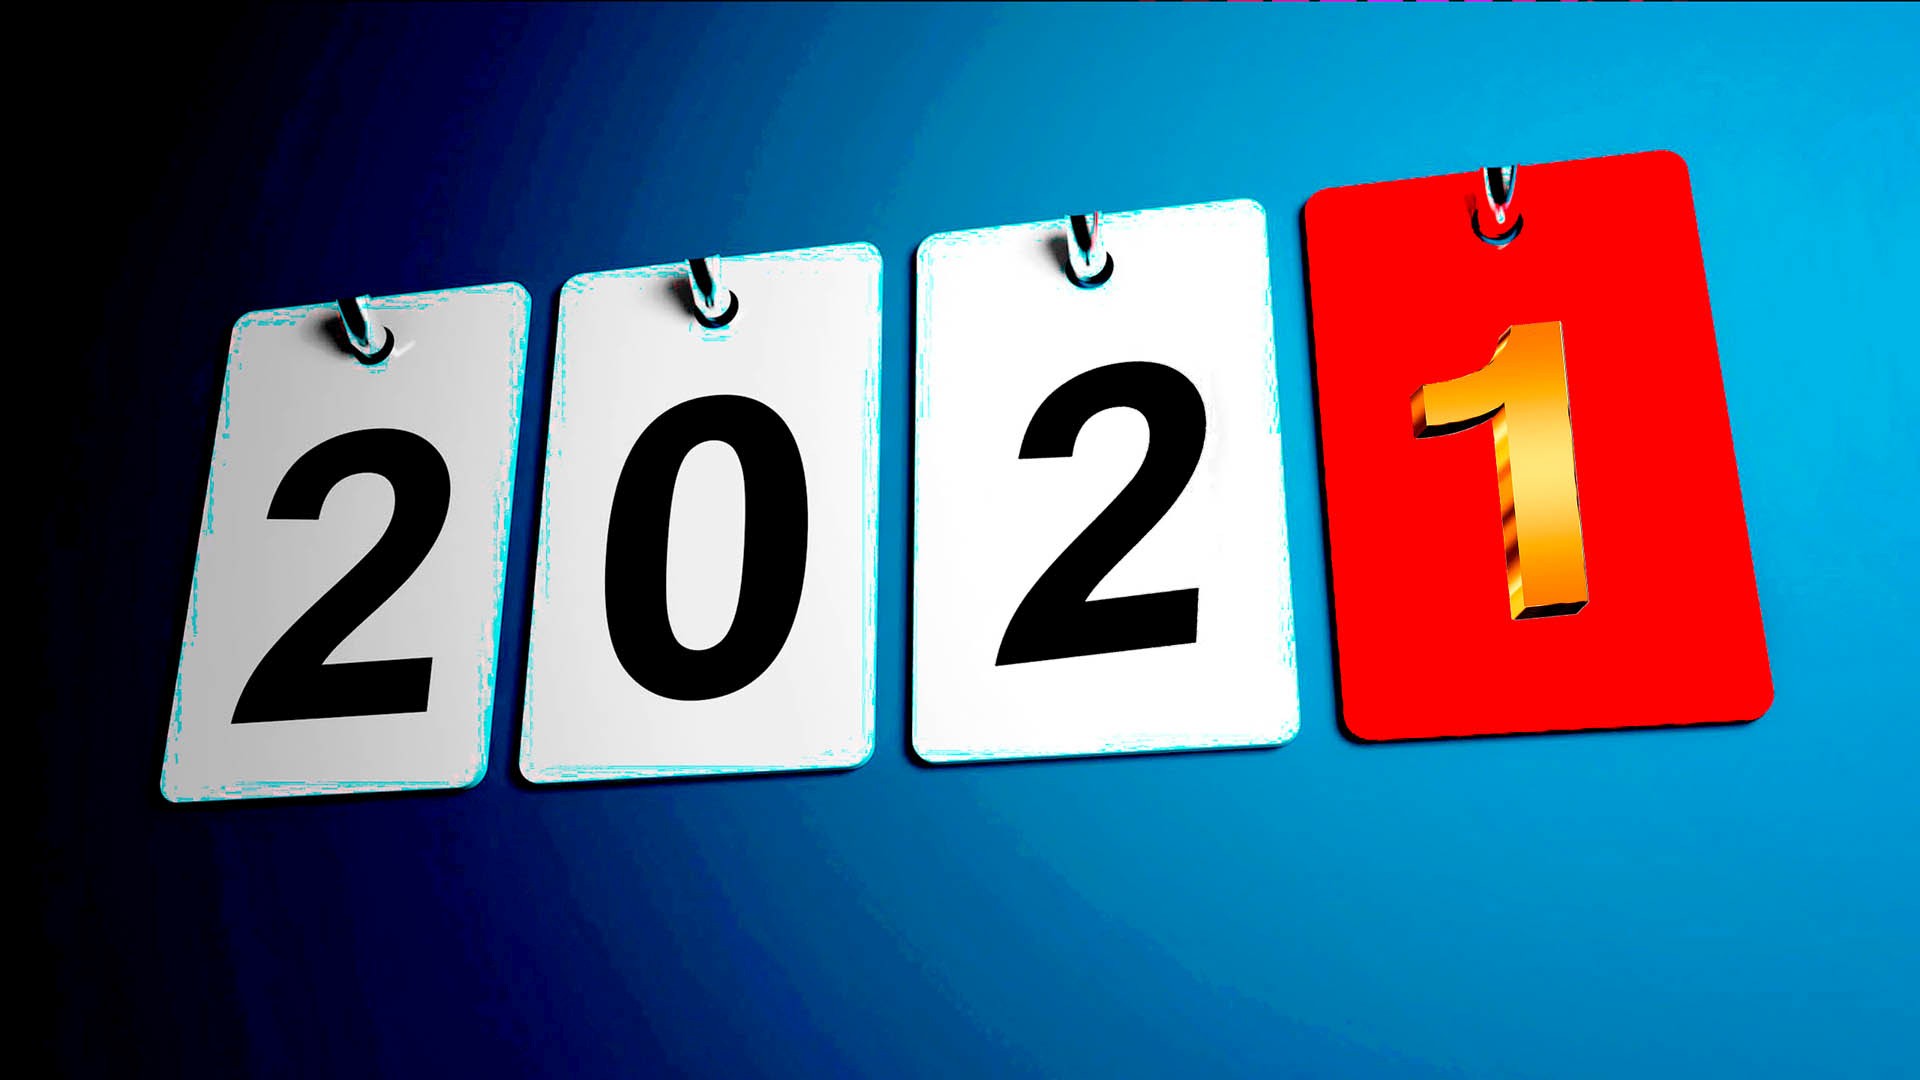 New Year 2021 Desktop Wallpaper